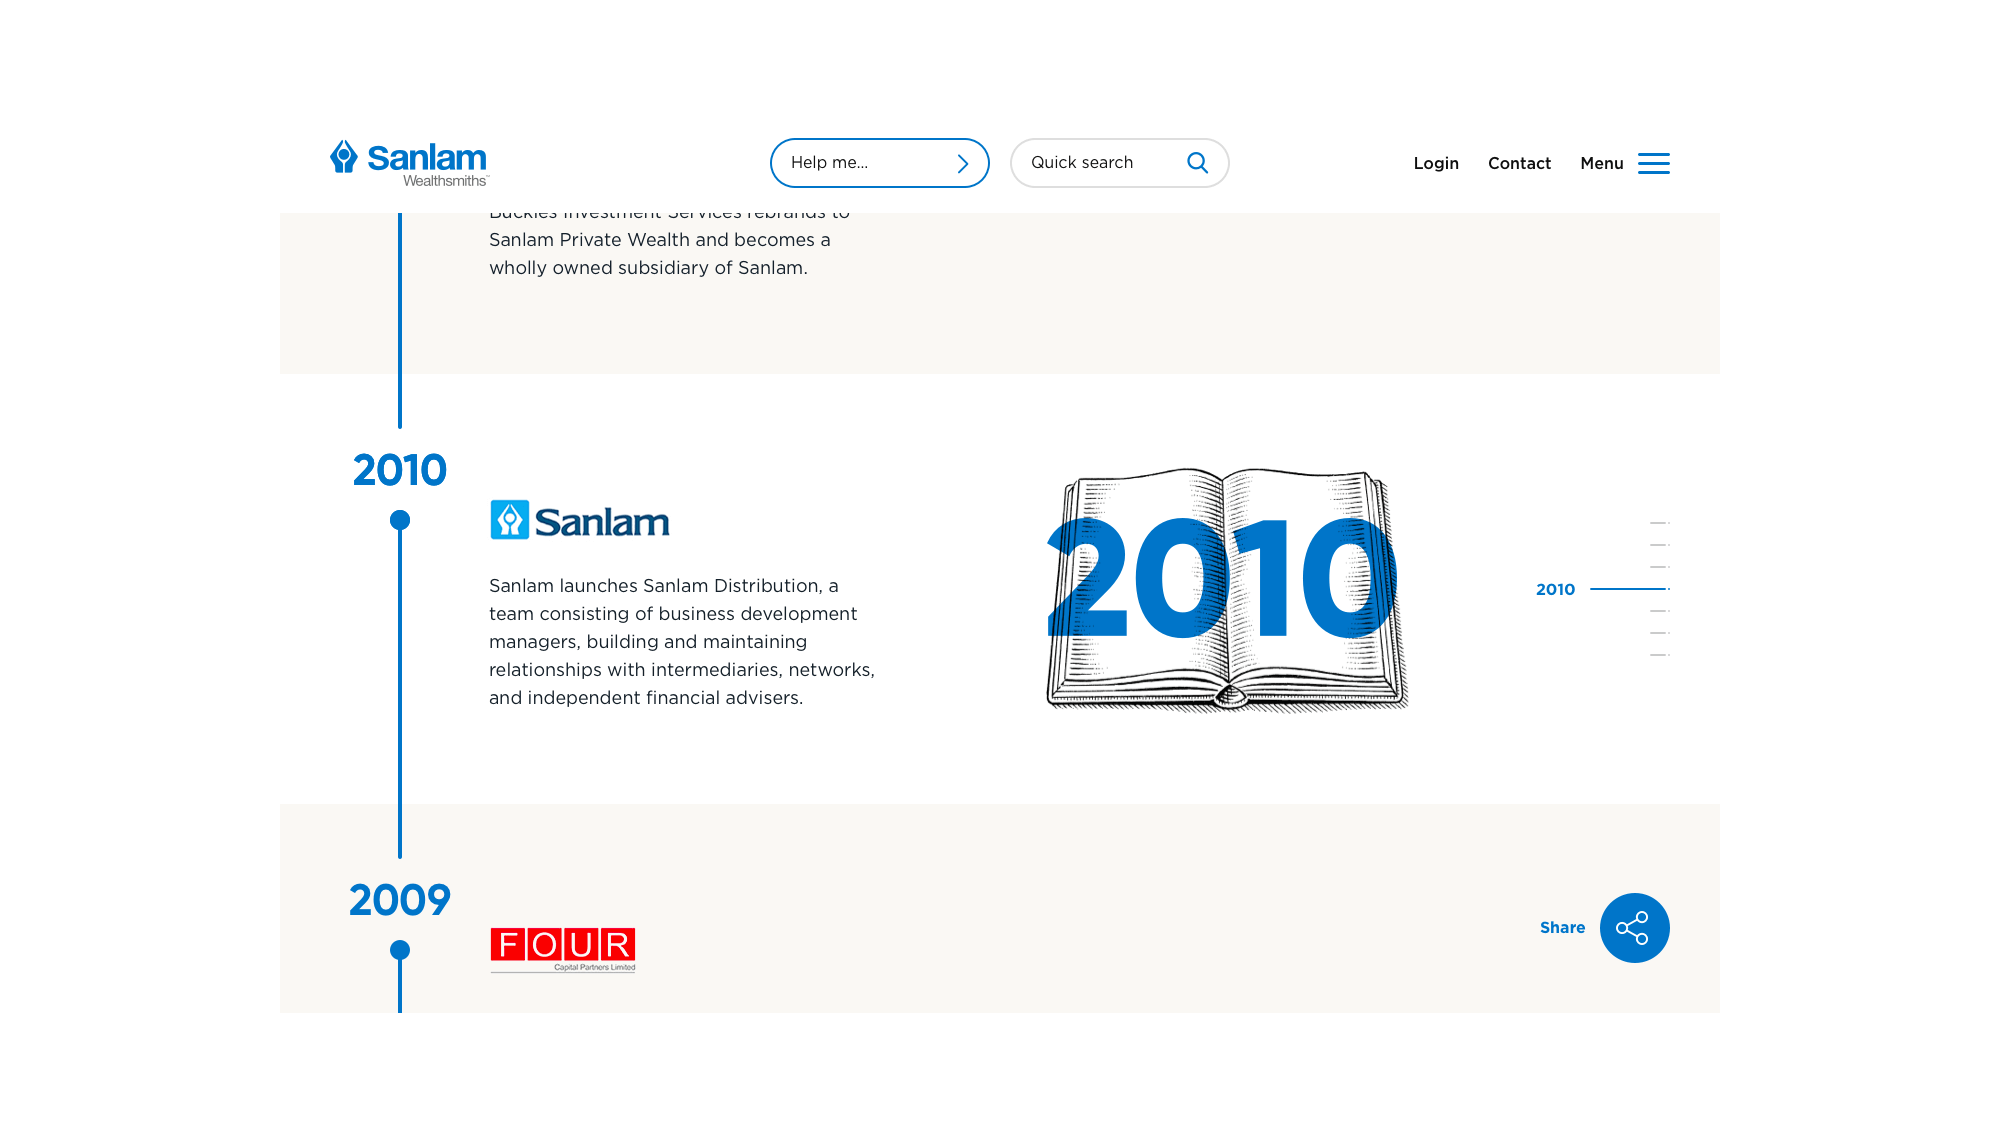 Sanlam's company history page